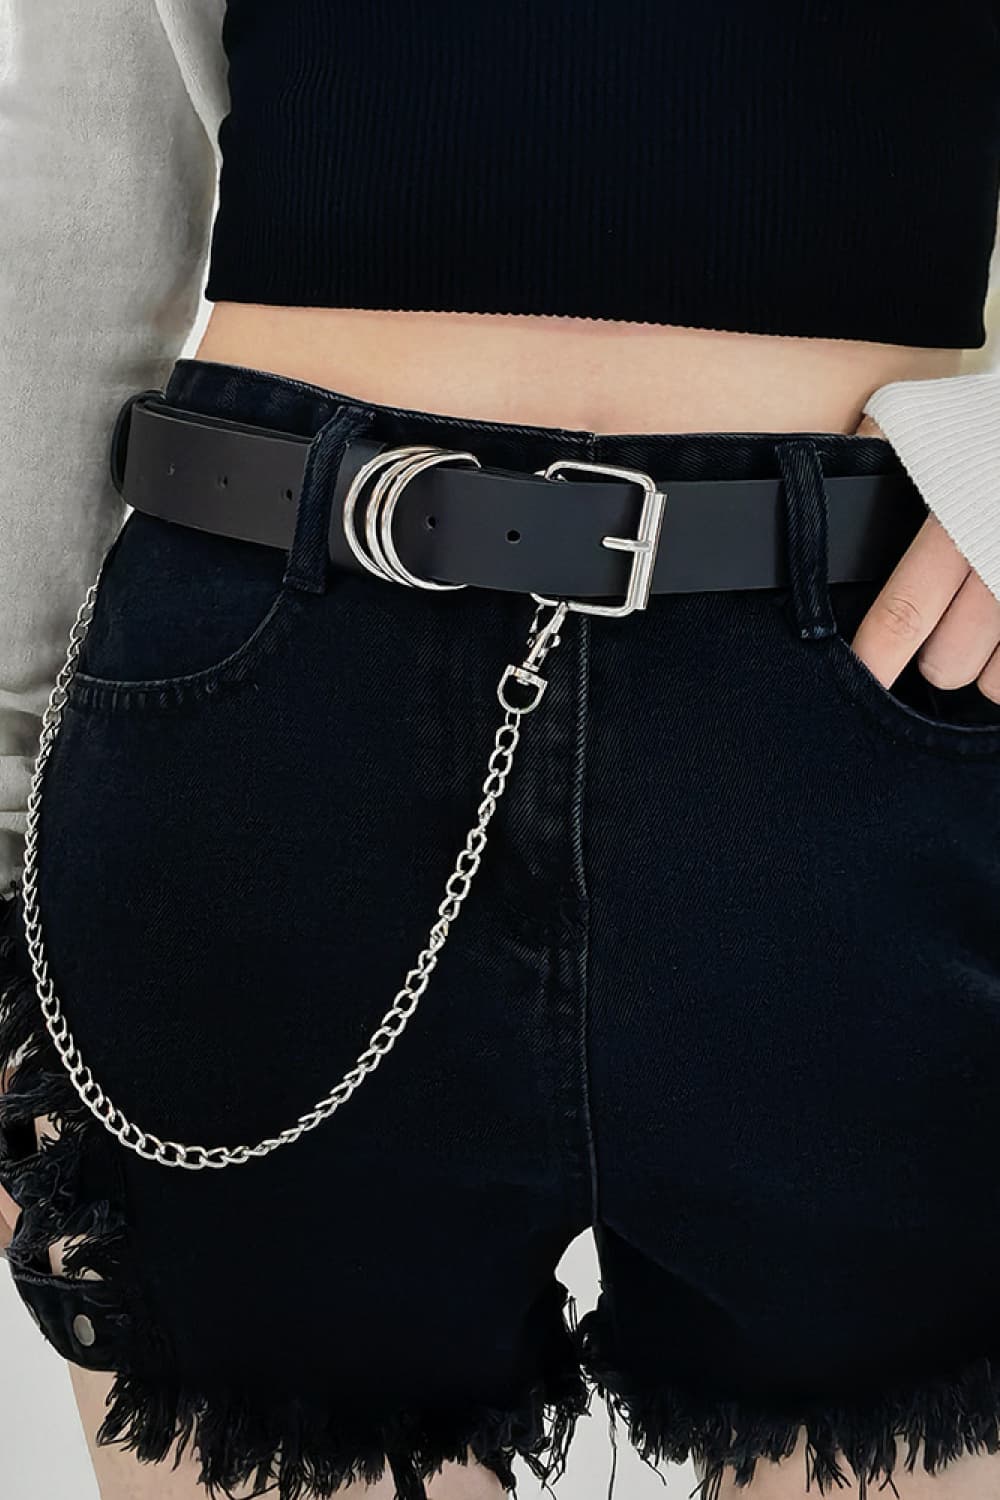 PU Leather Alloy Chain Belt